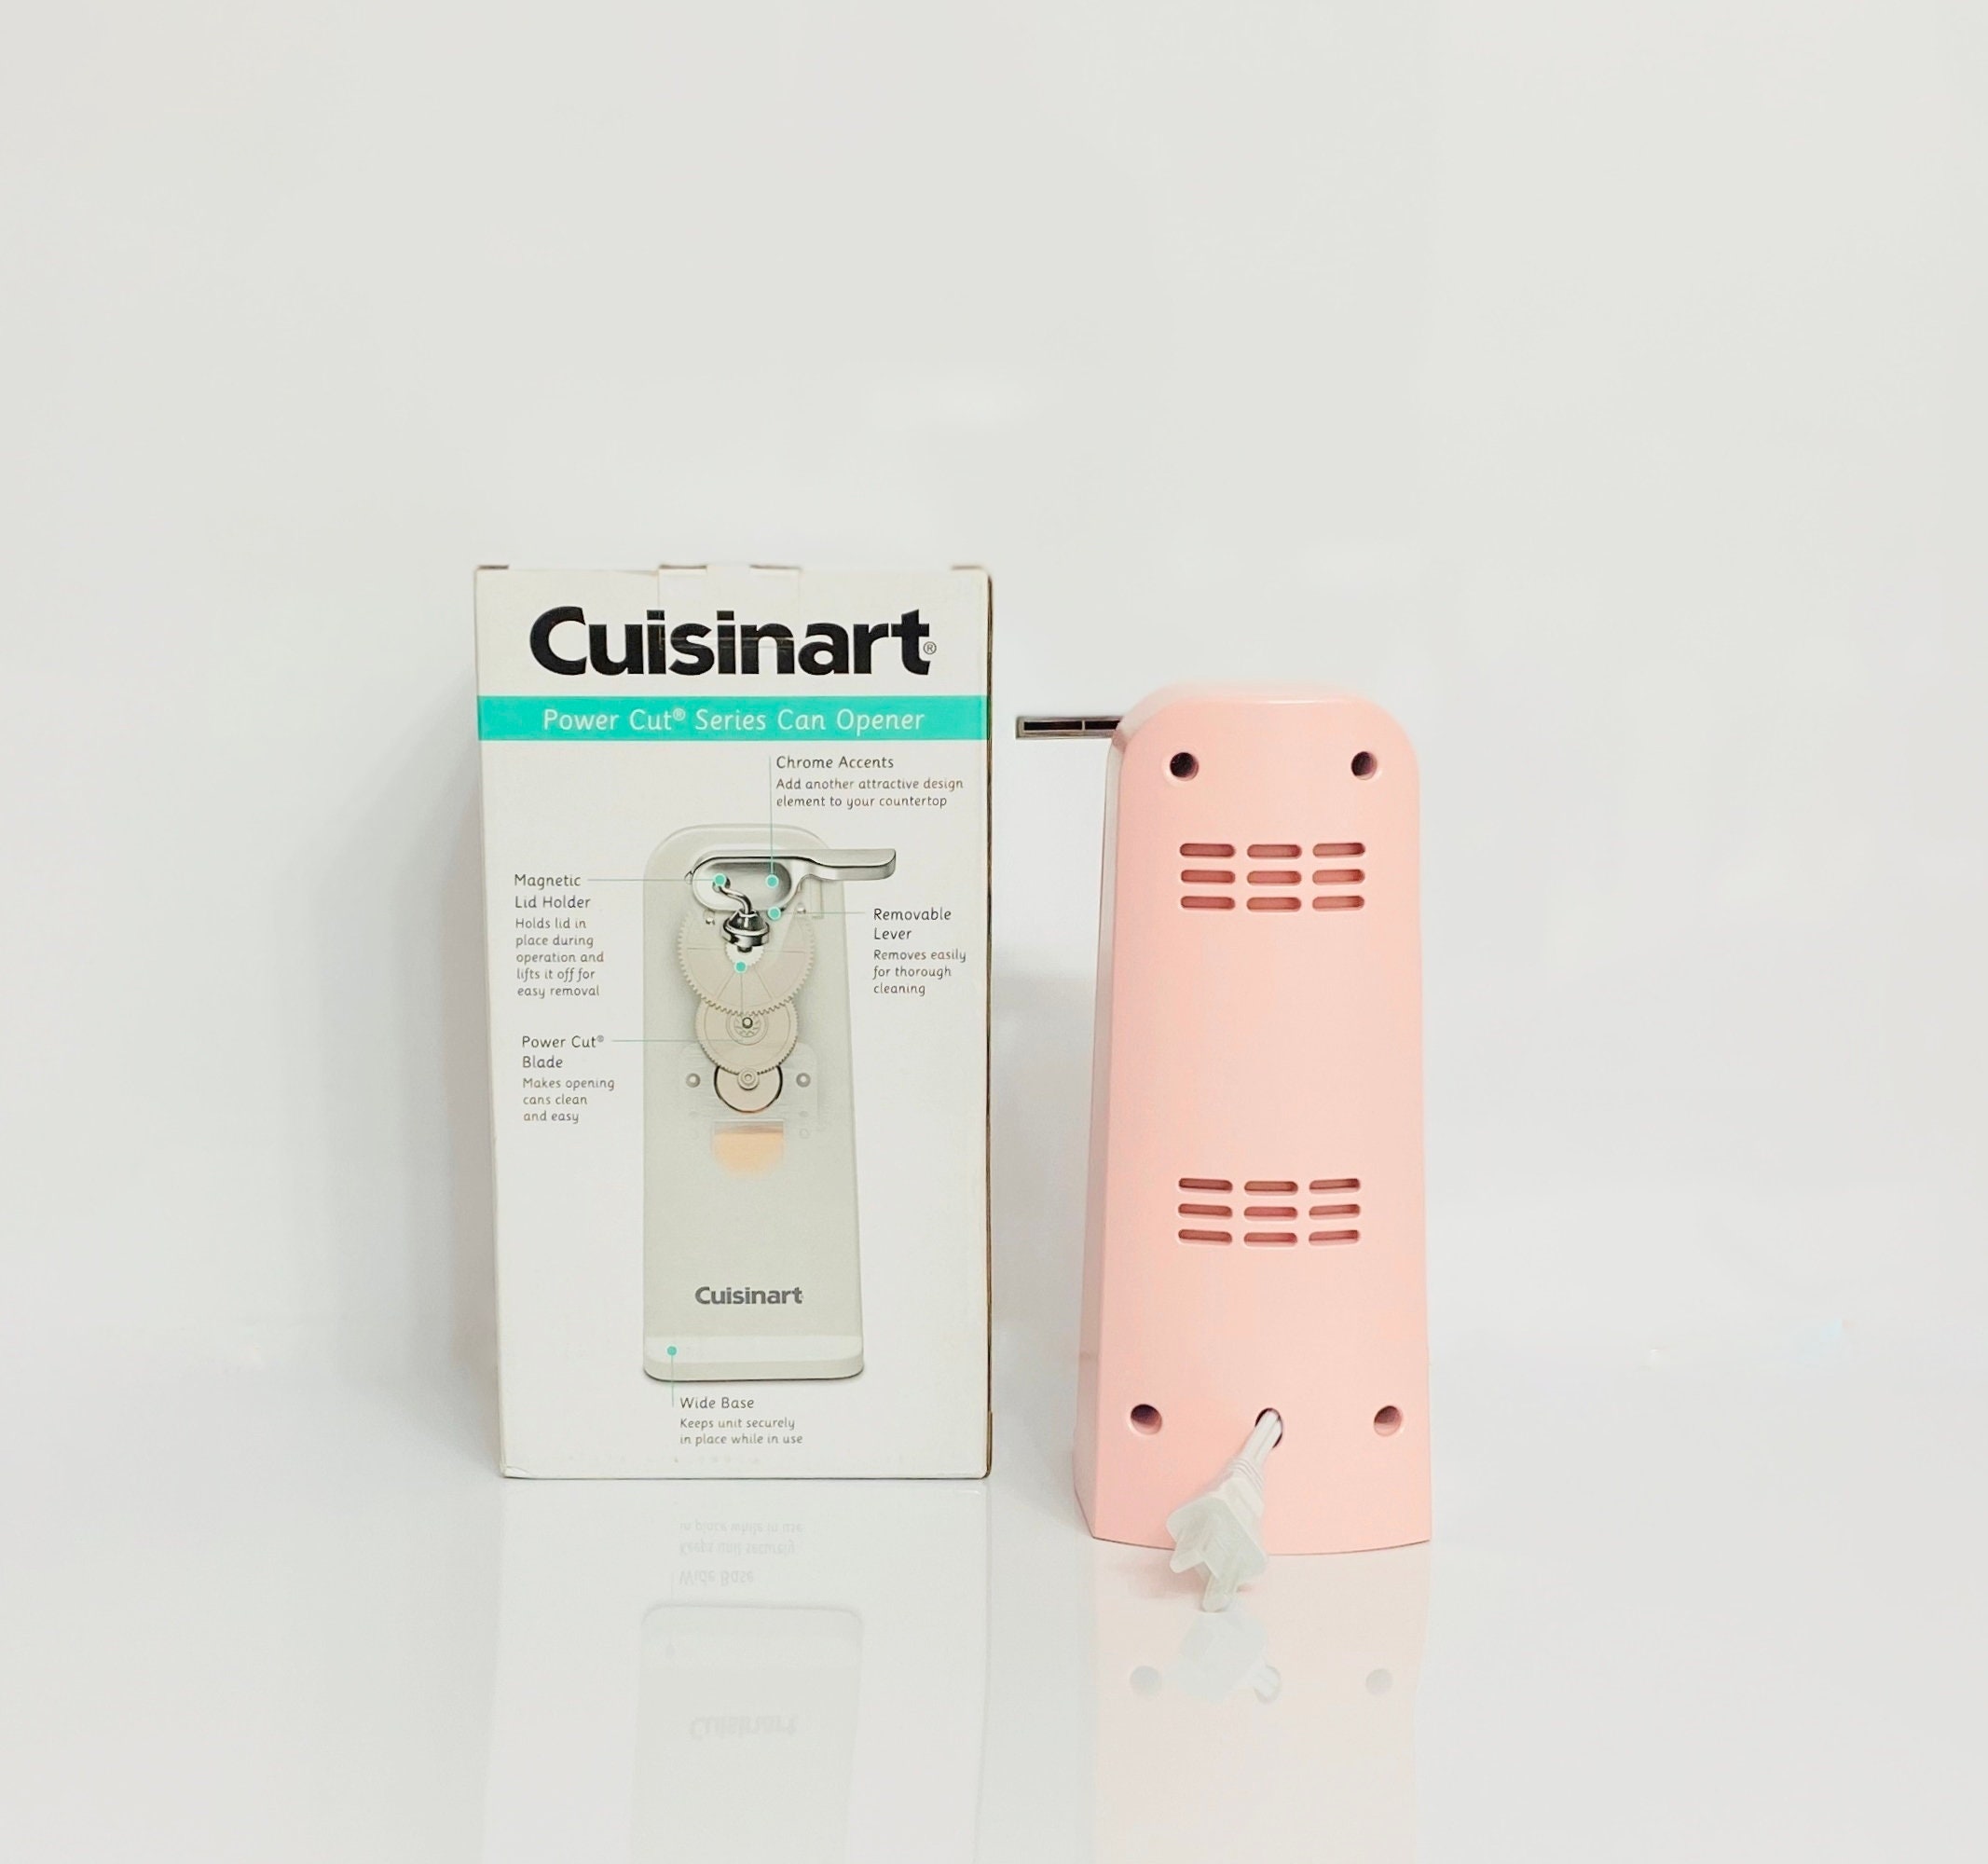 Light Blush Pink Cuisinart Electric Tall Can Opener, Pink Kitchenaid , Pink  Retro Kitchen, Shabby Chic Pink Kitchen, Blush Pink Appliances 